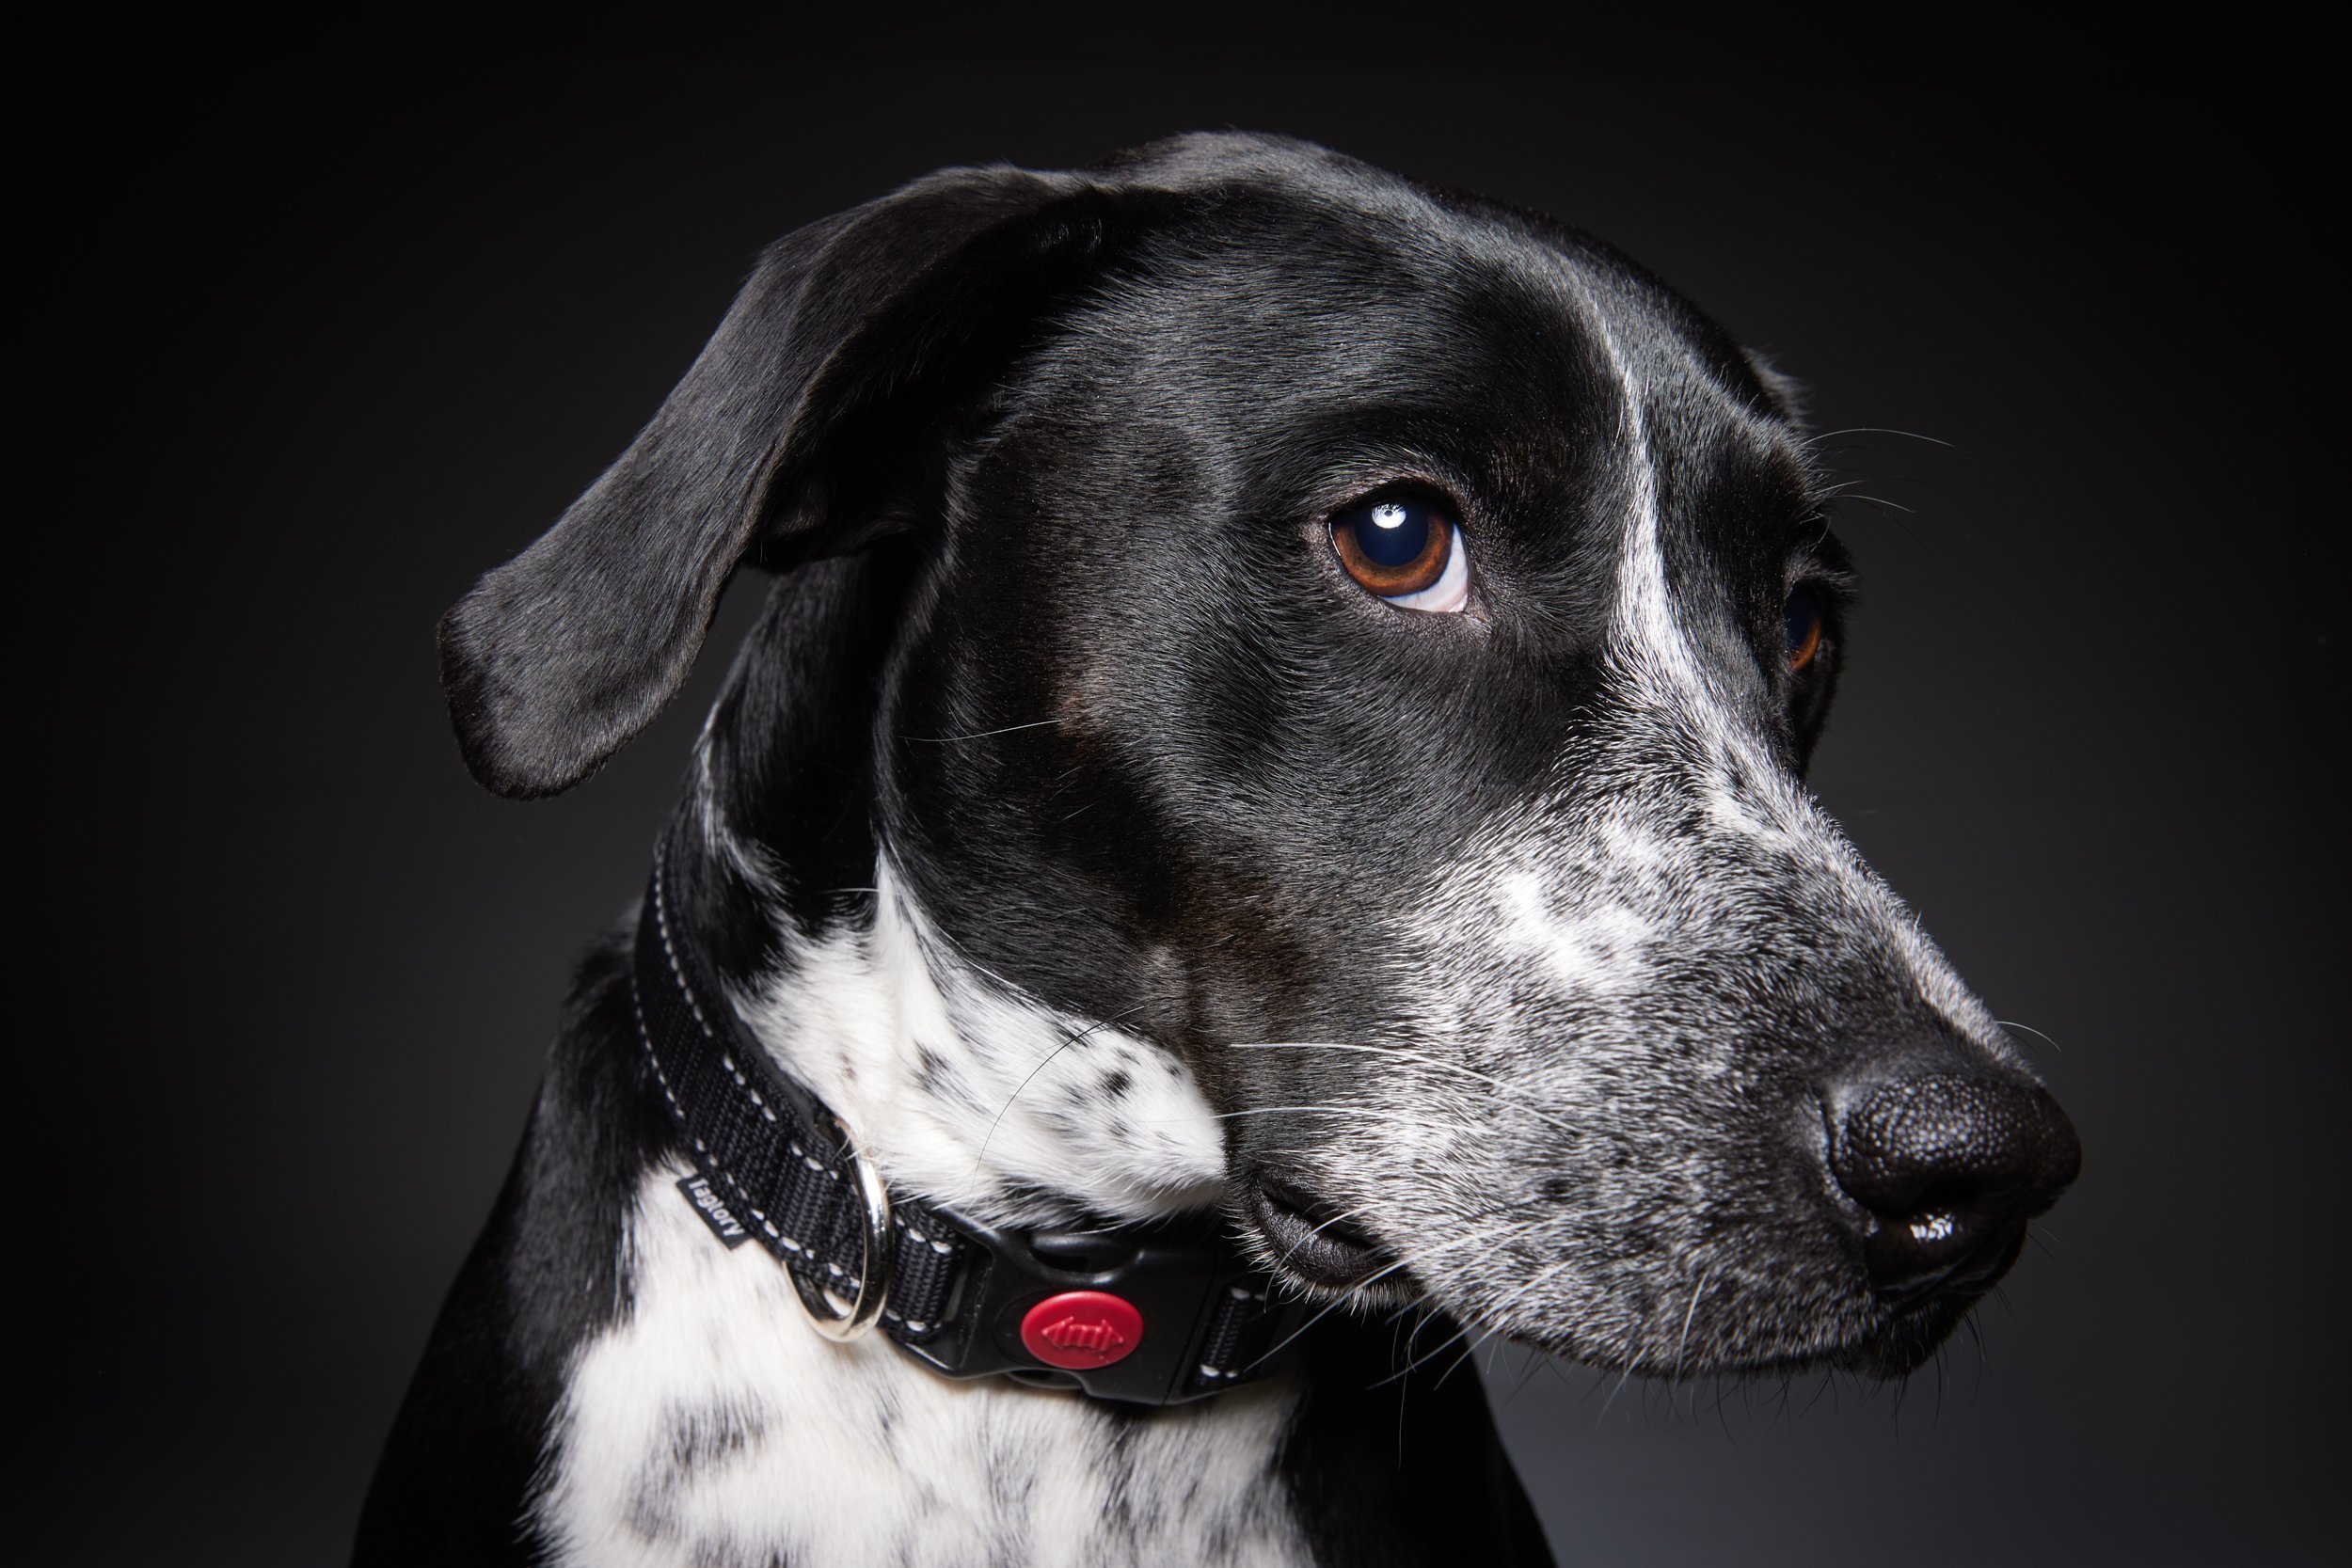 josey wales dog portraits (3 of 6).jpg